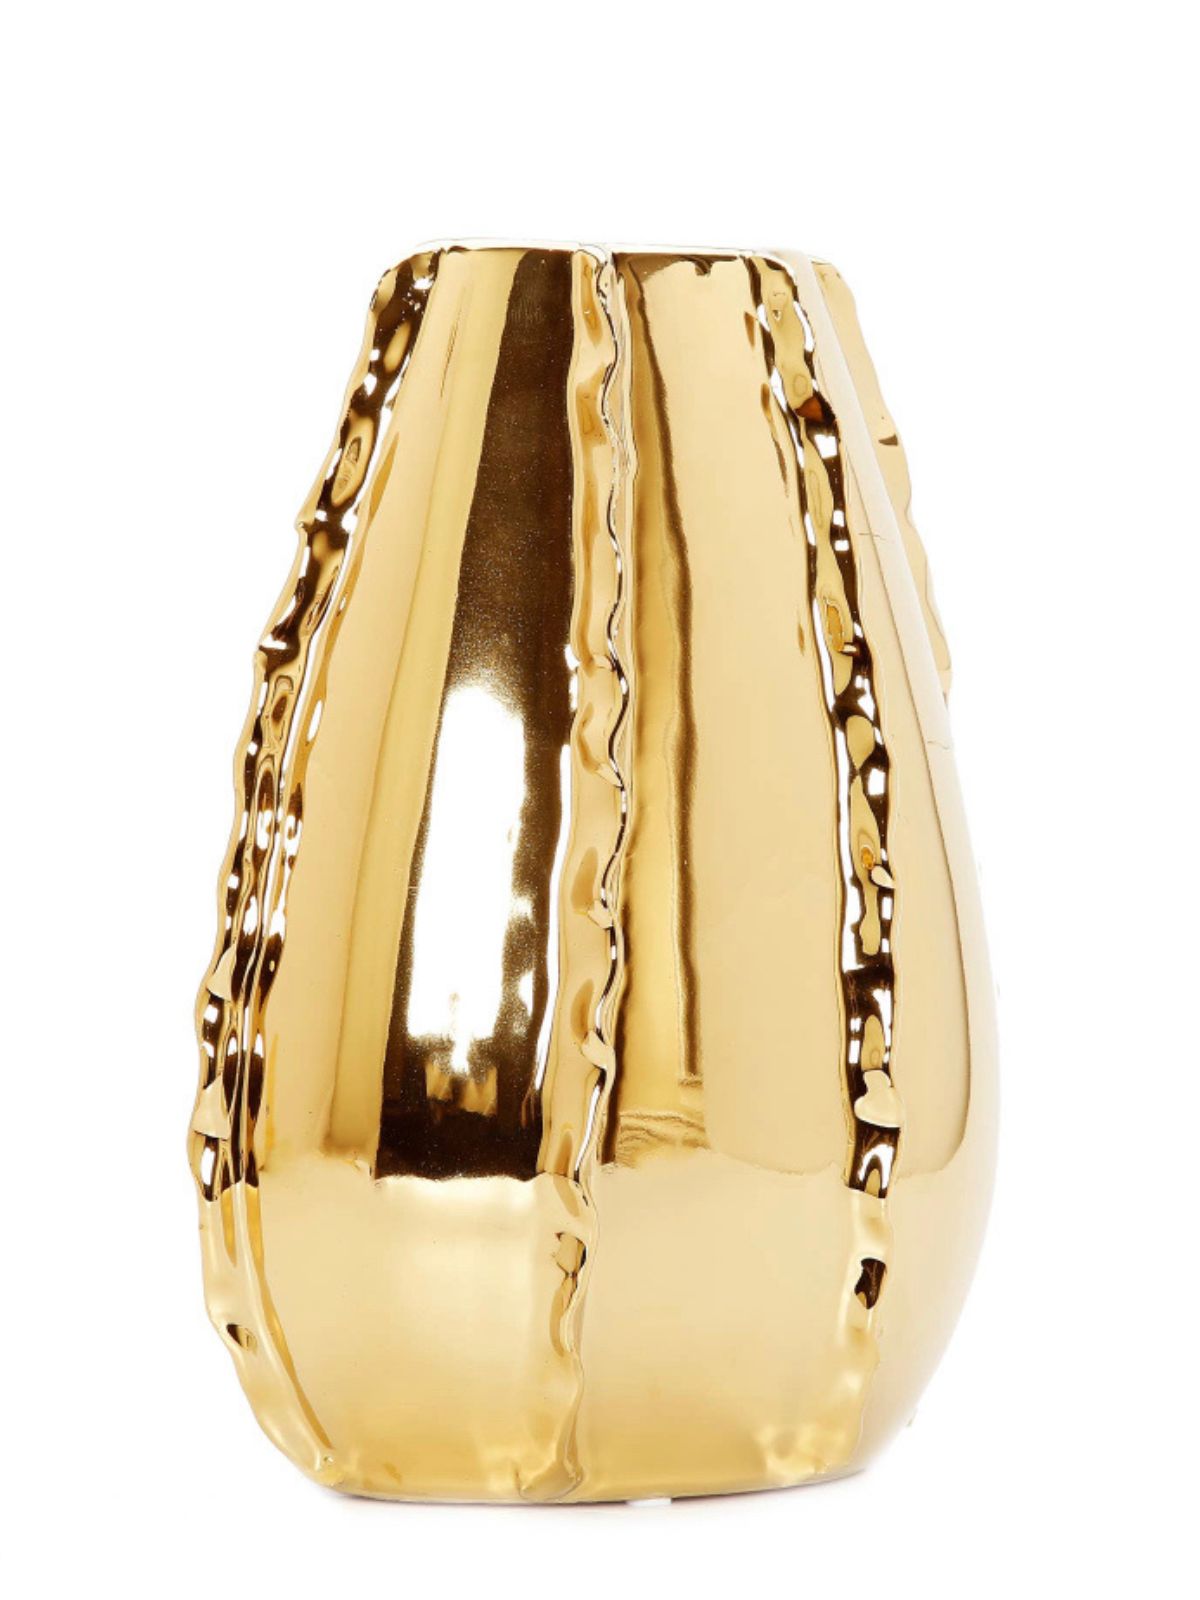 11H Glossy Gold Tear Shaped Ceramic Vase with Luxury Swivel Design - KYA Home Decor